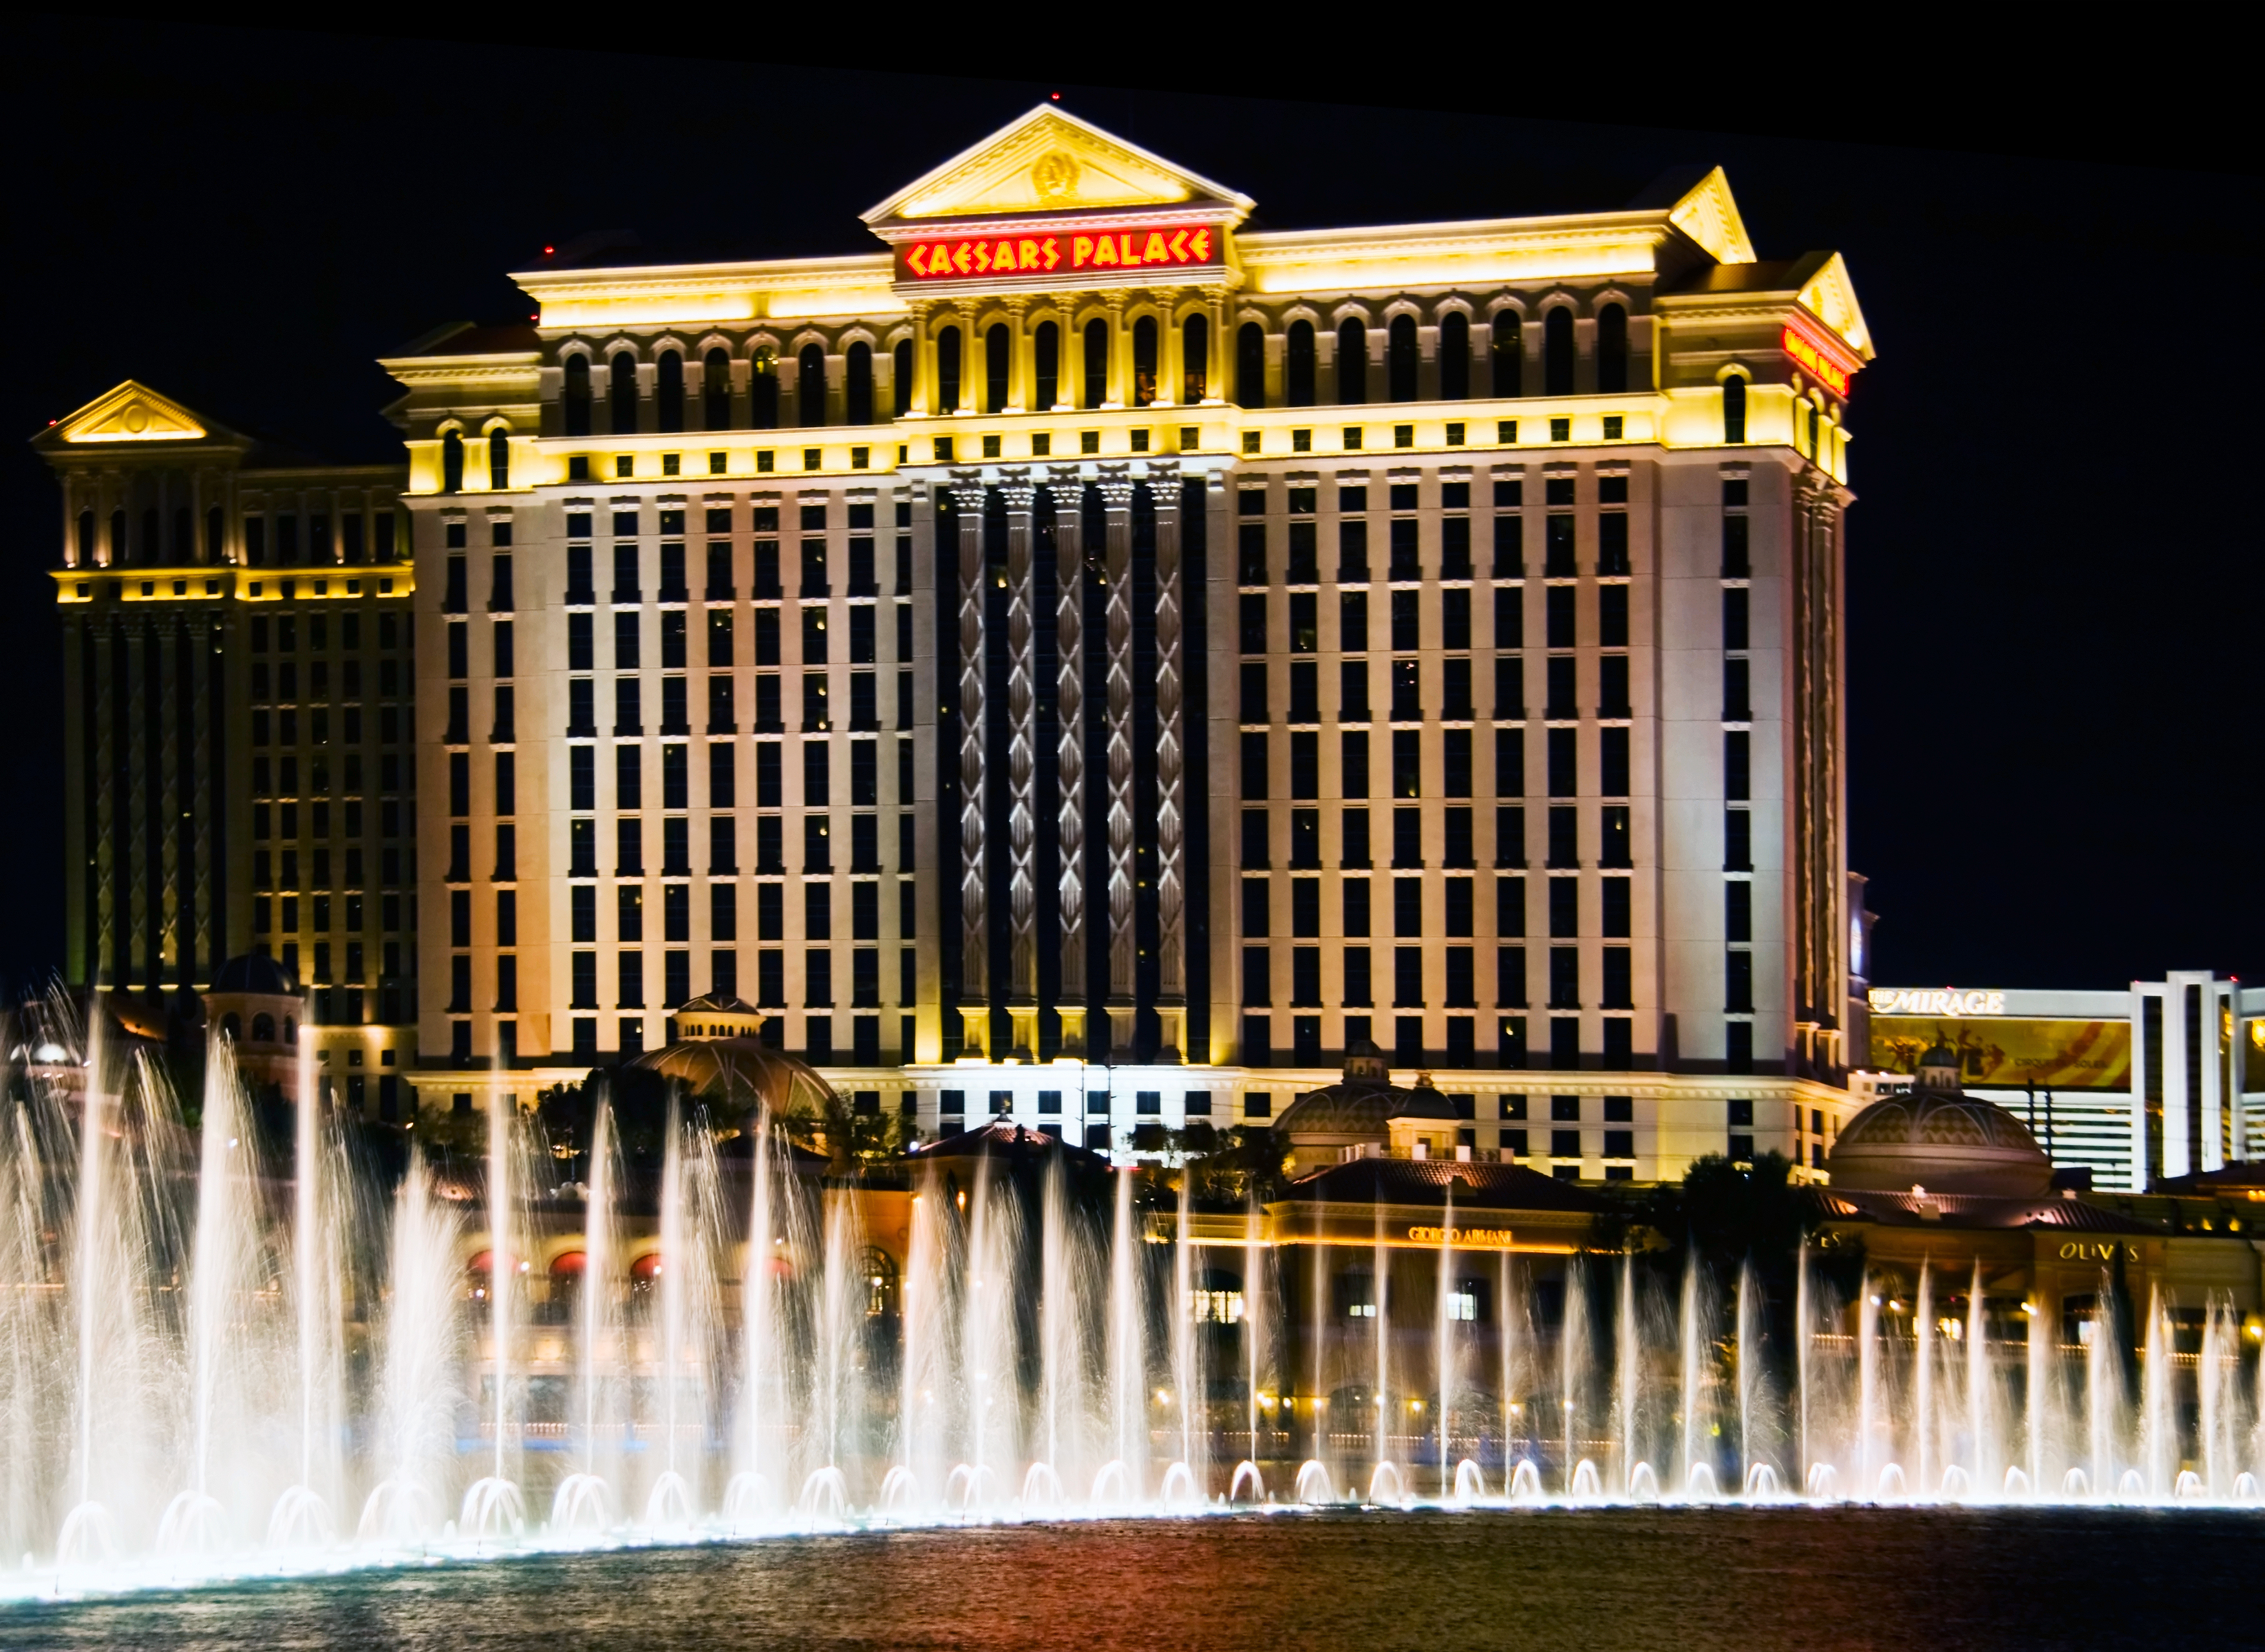 The Caesars Palace Hotel Las Vegas